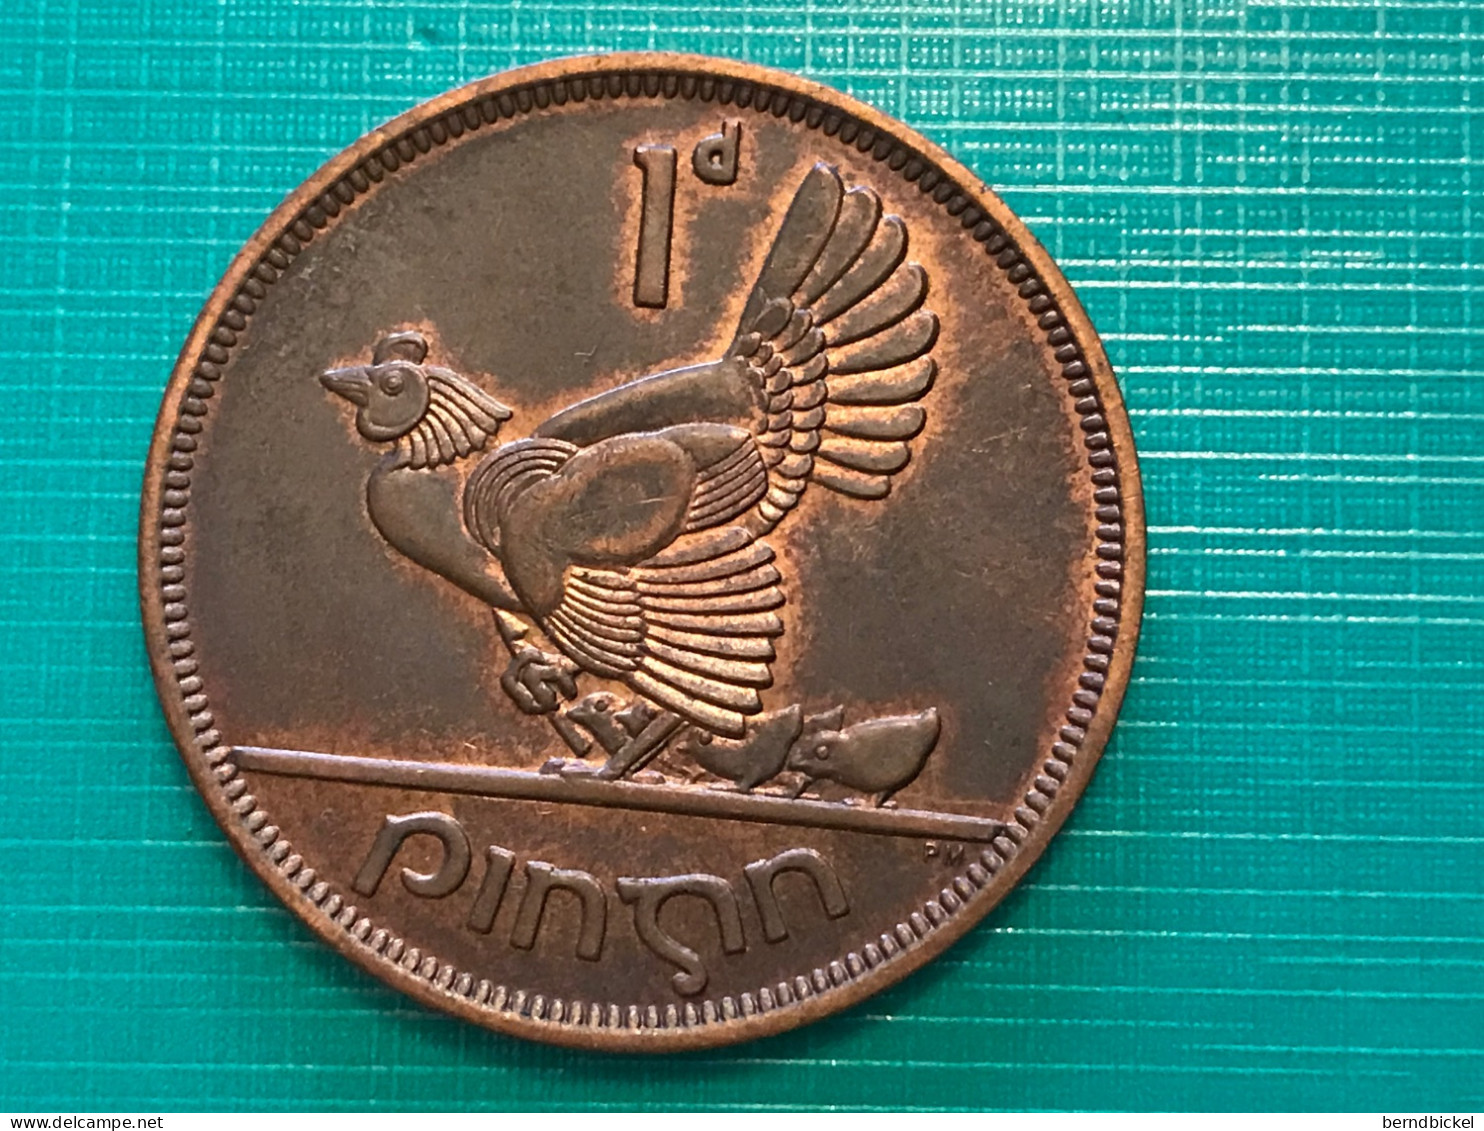 Münze Münzen Umlaufmünze Irland 1 Penny 1968 - Ireland